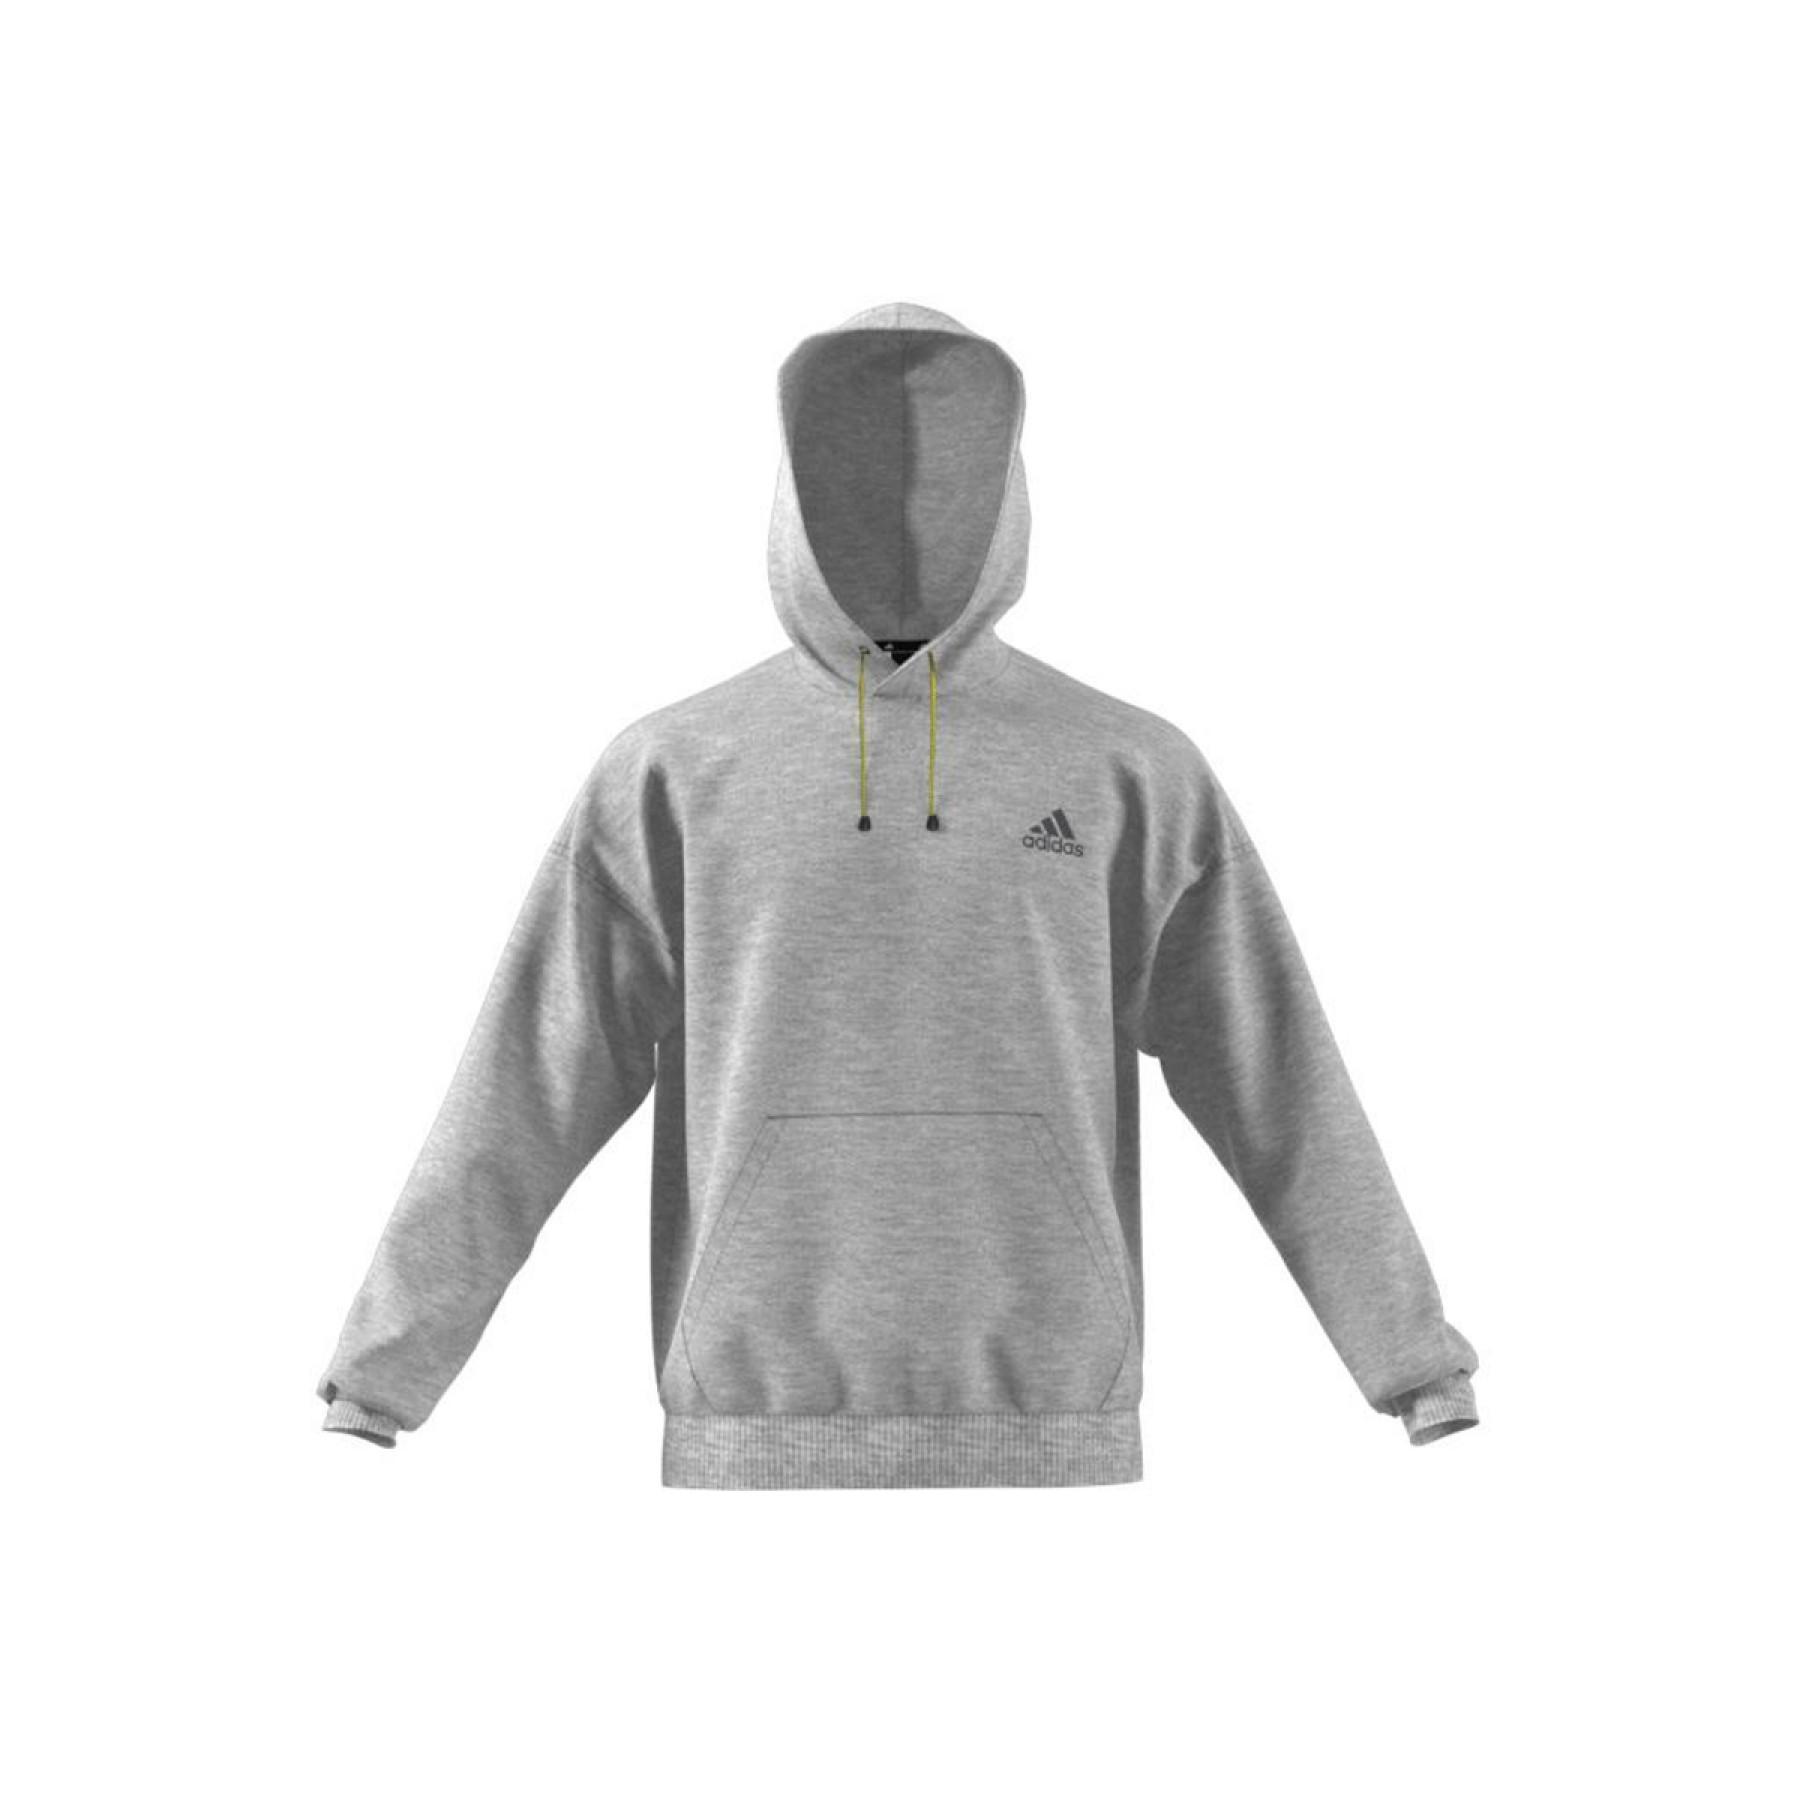 Hooded sweatshirt adidas Mountain Graphic